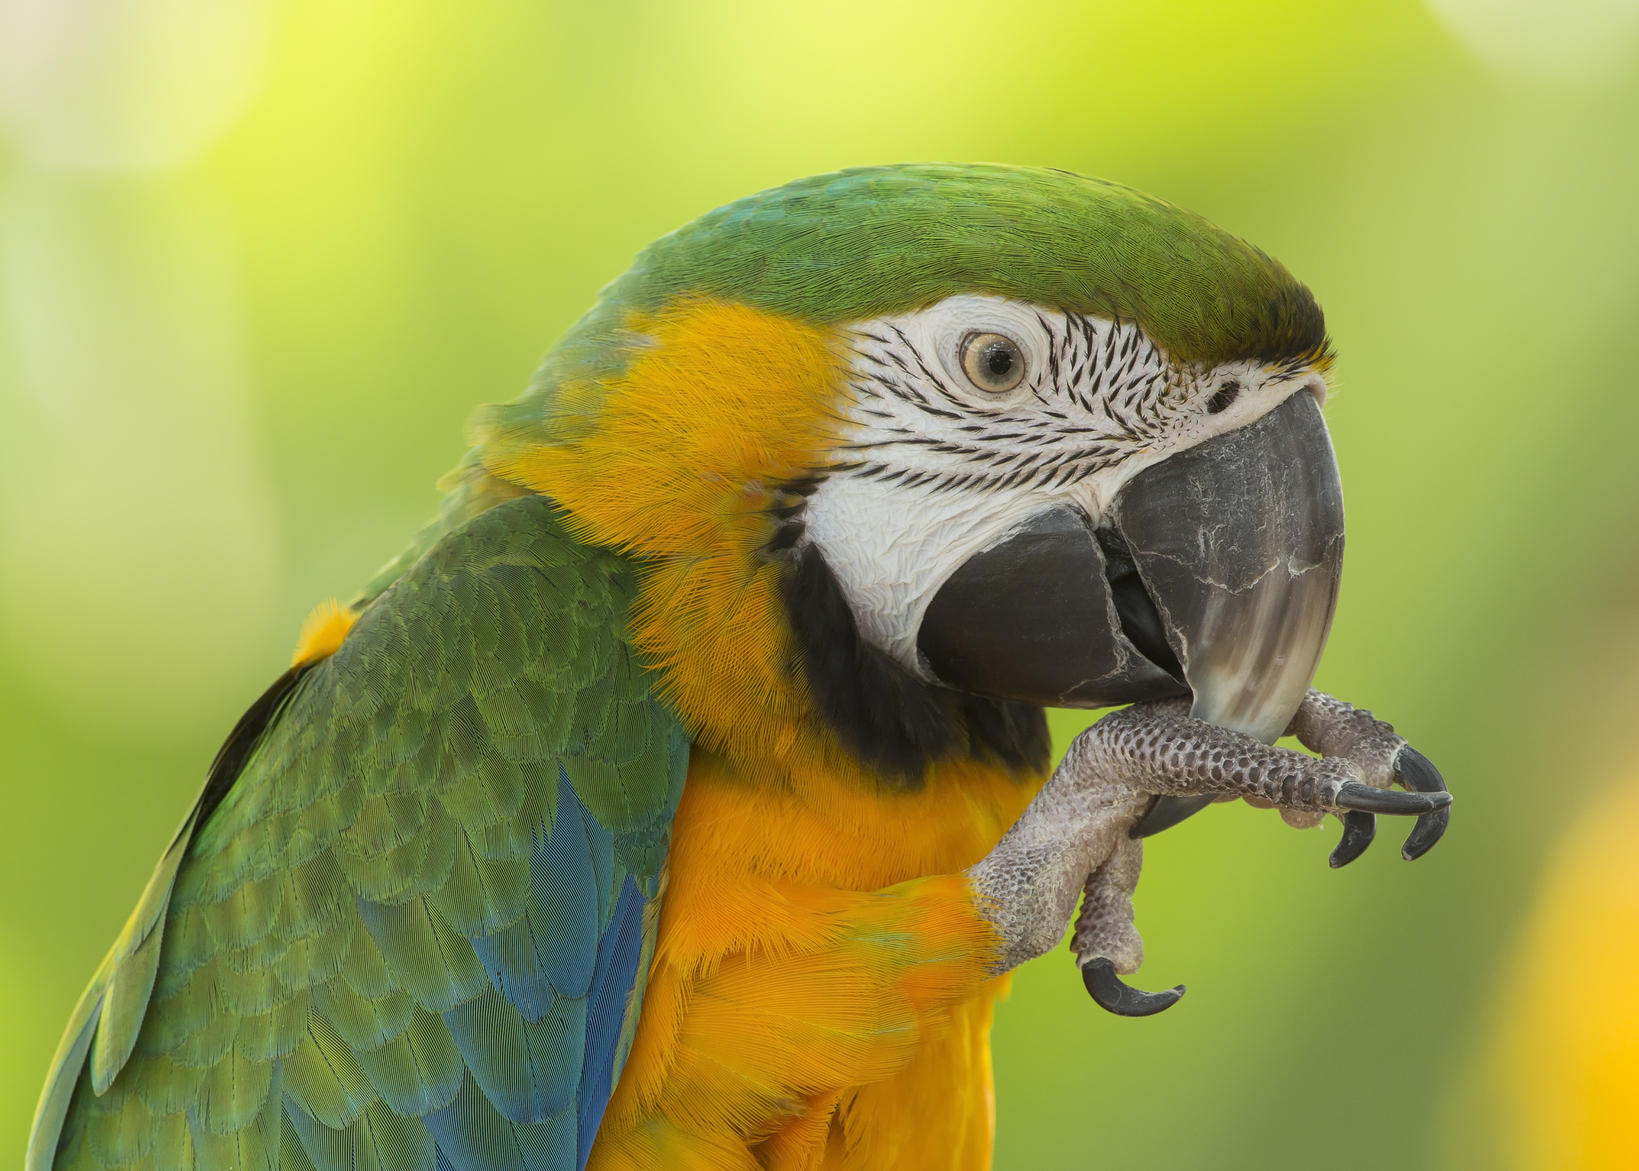 man-s-pet-birds-gave-him-rare-case-of-parrot-fever-cbs-news